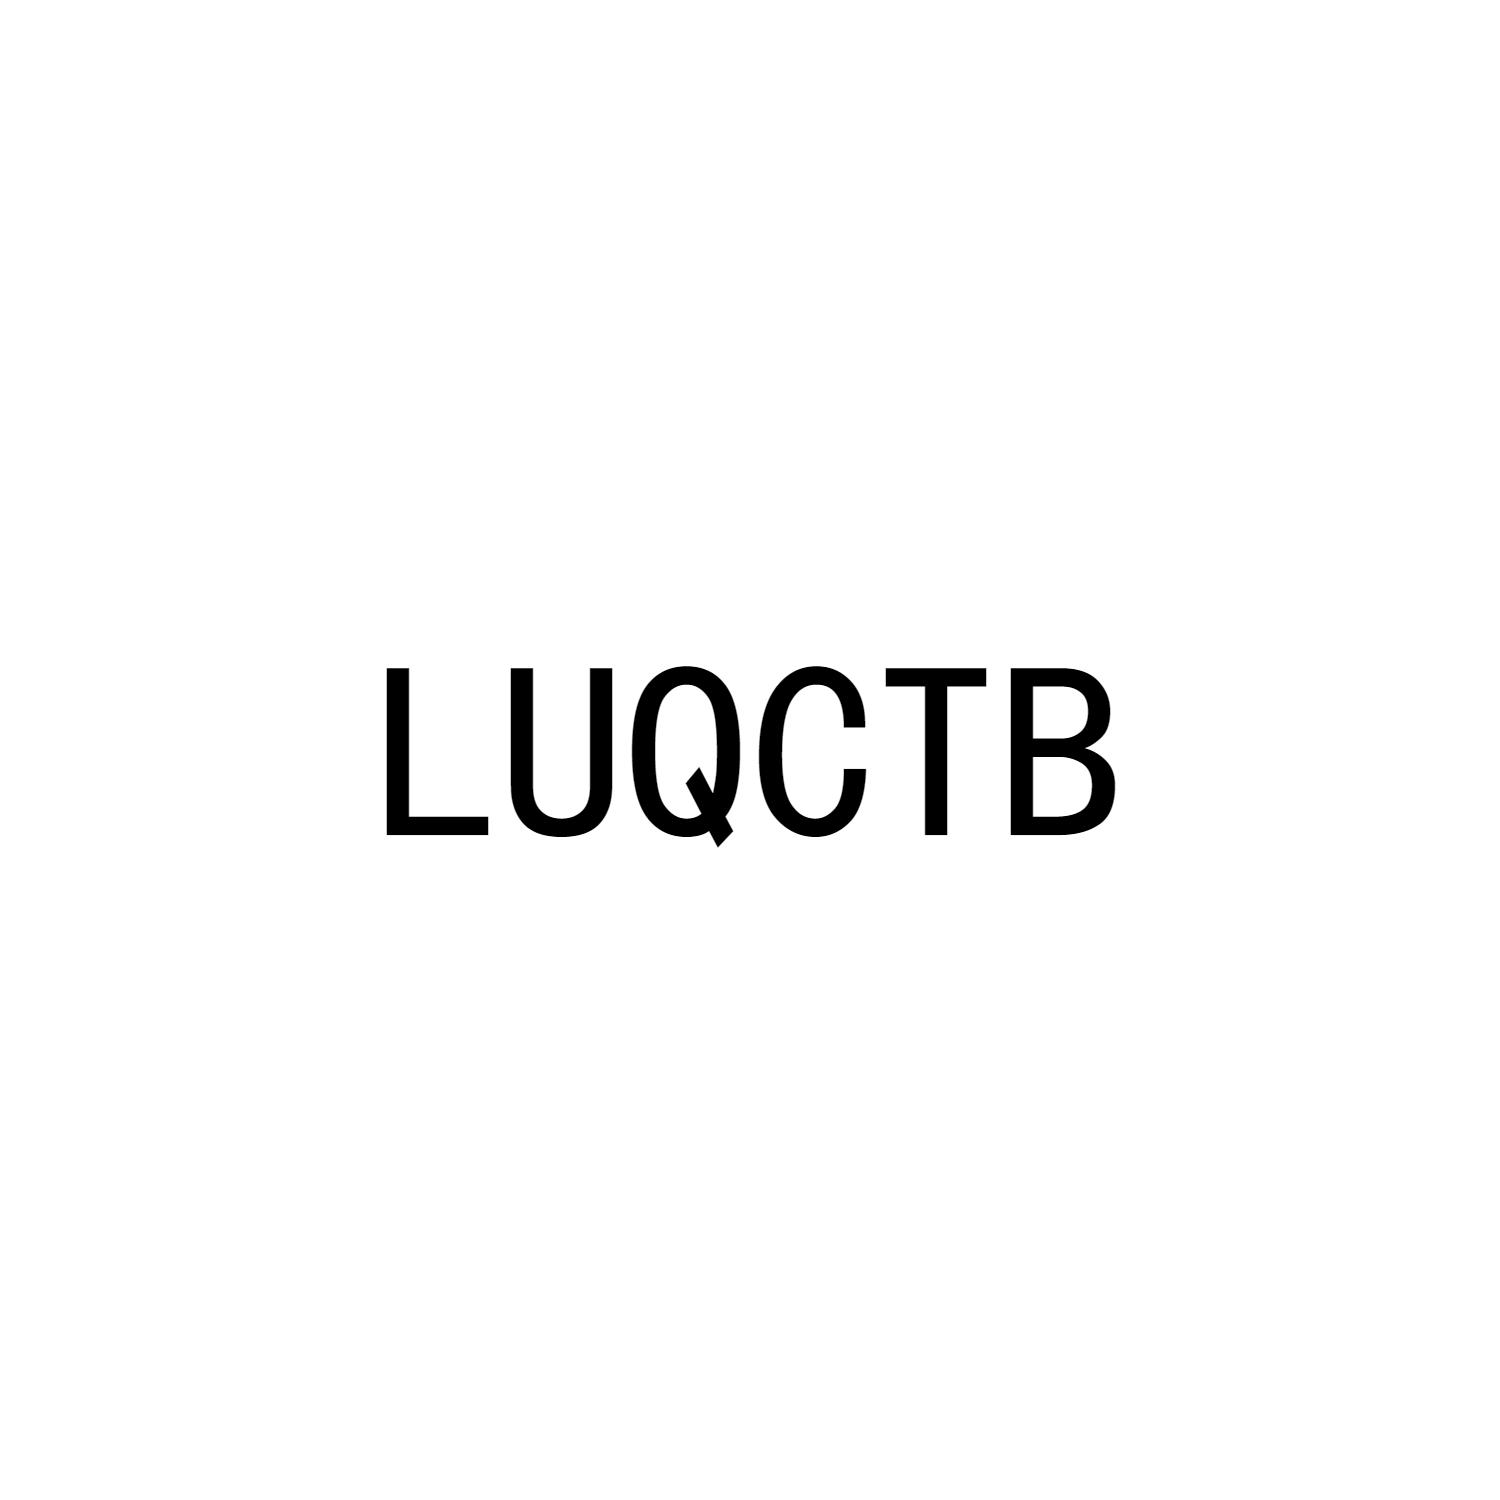 LUQCTB